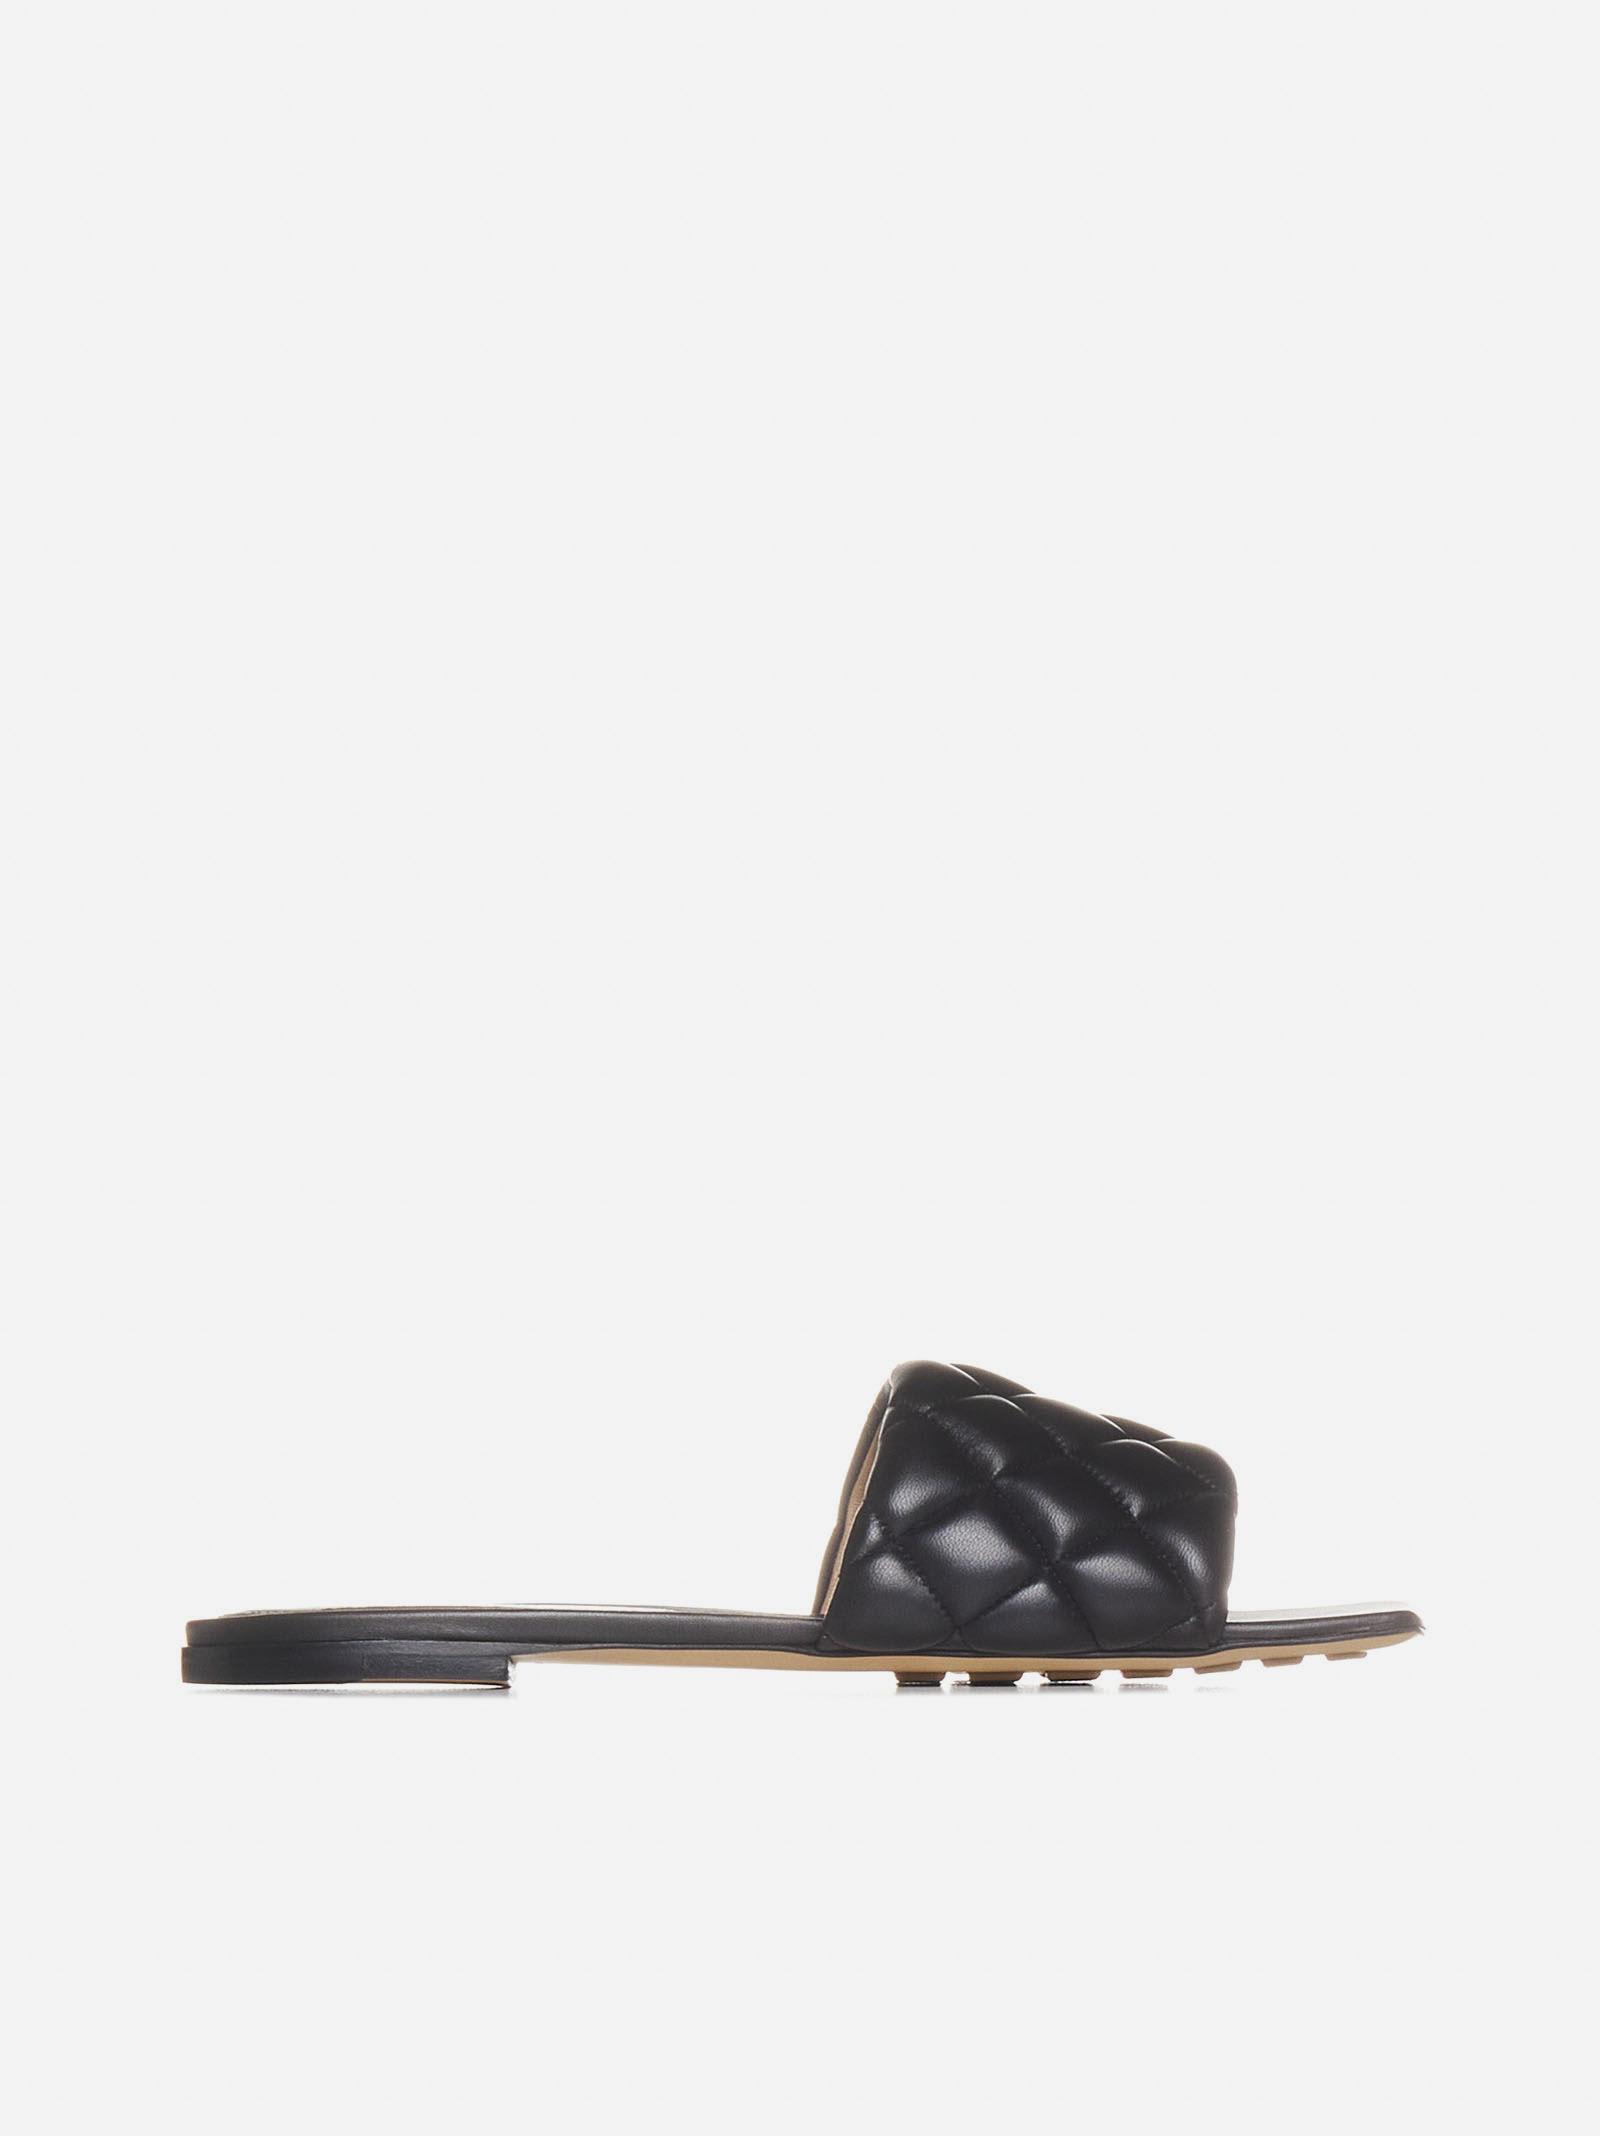 Bottega Veneta Padded Intrecciato Leather Flat Sandals